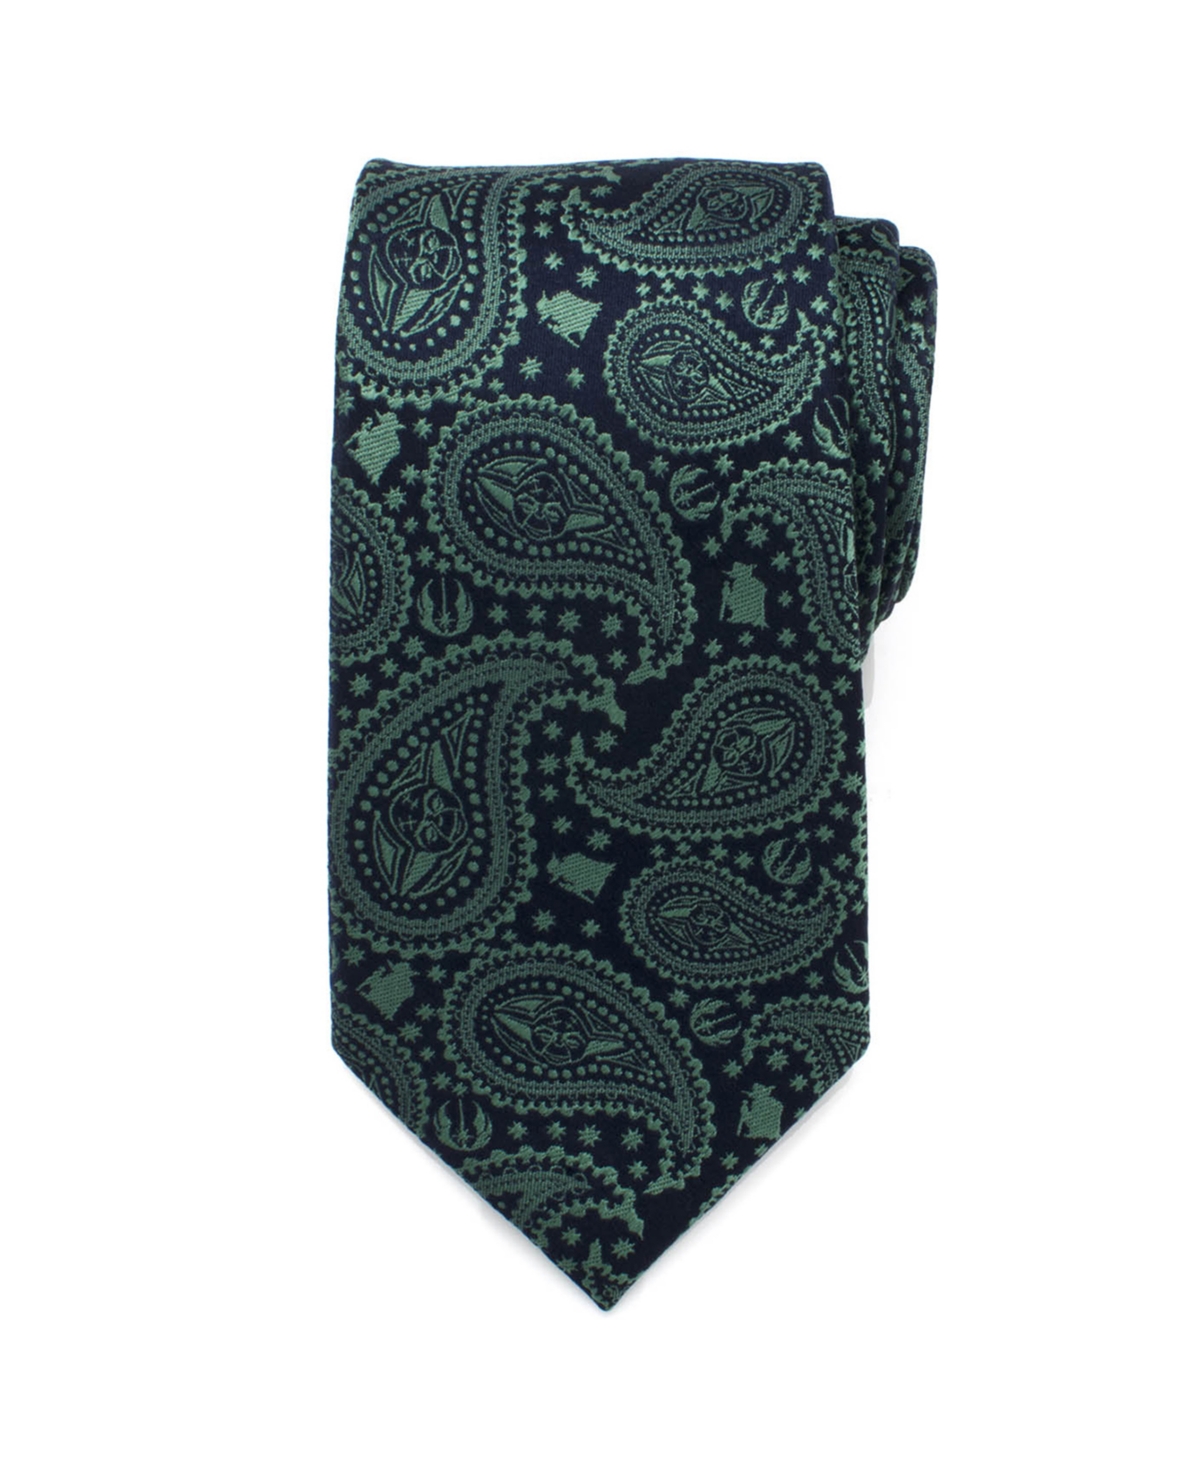 Yoda Paisley Men's Tie - Green